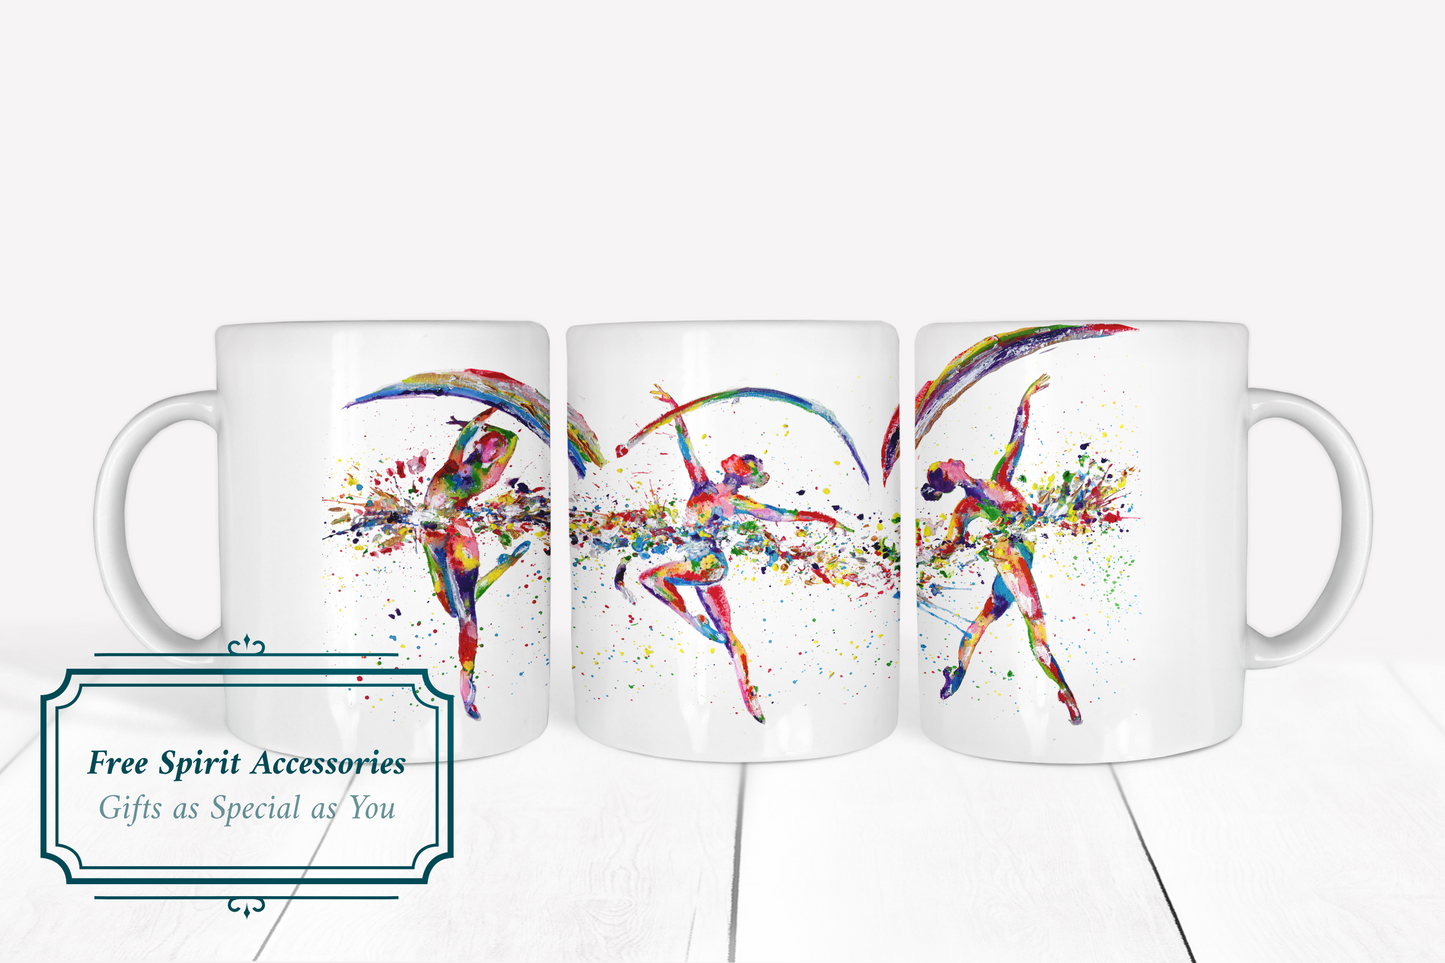  Rainbow Dancers All Around Print Mug by Free Spirit Accessories sold by Free Spirit Accessories